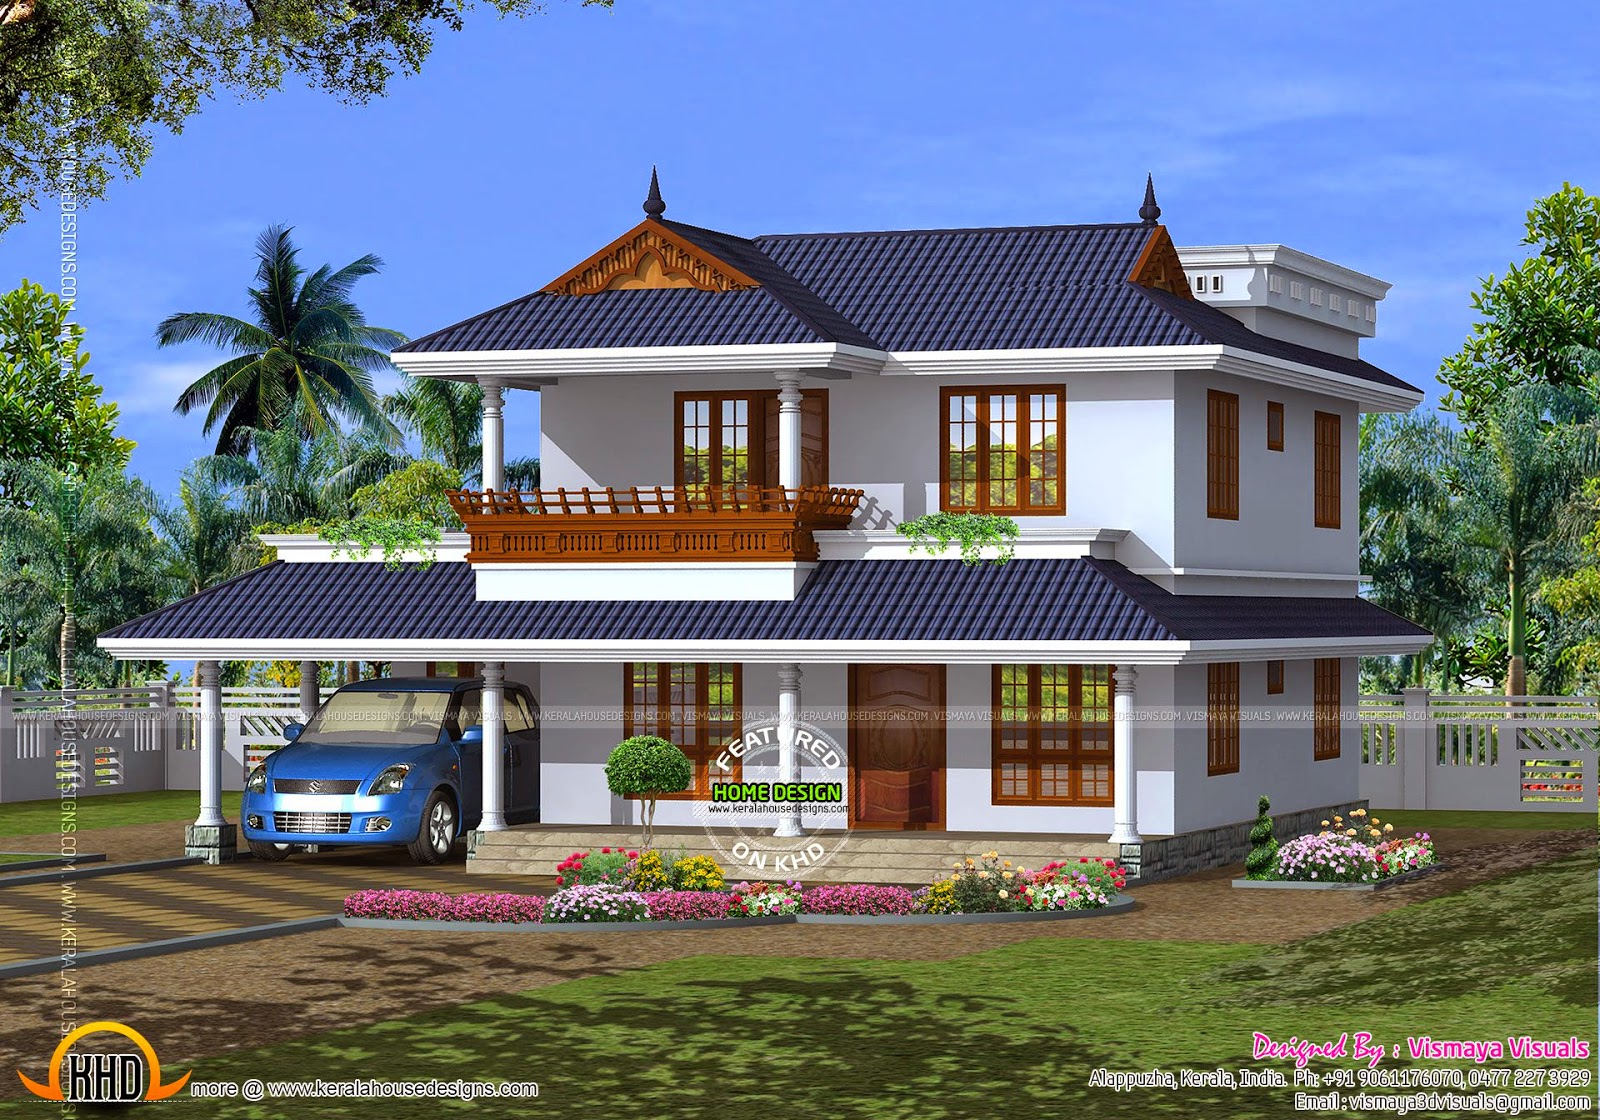  House  model  Kerala  Kerala  home  design  and floor plans 